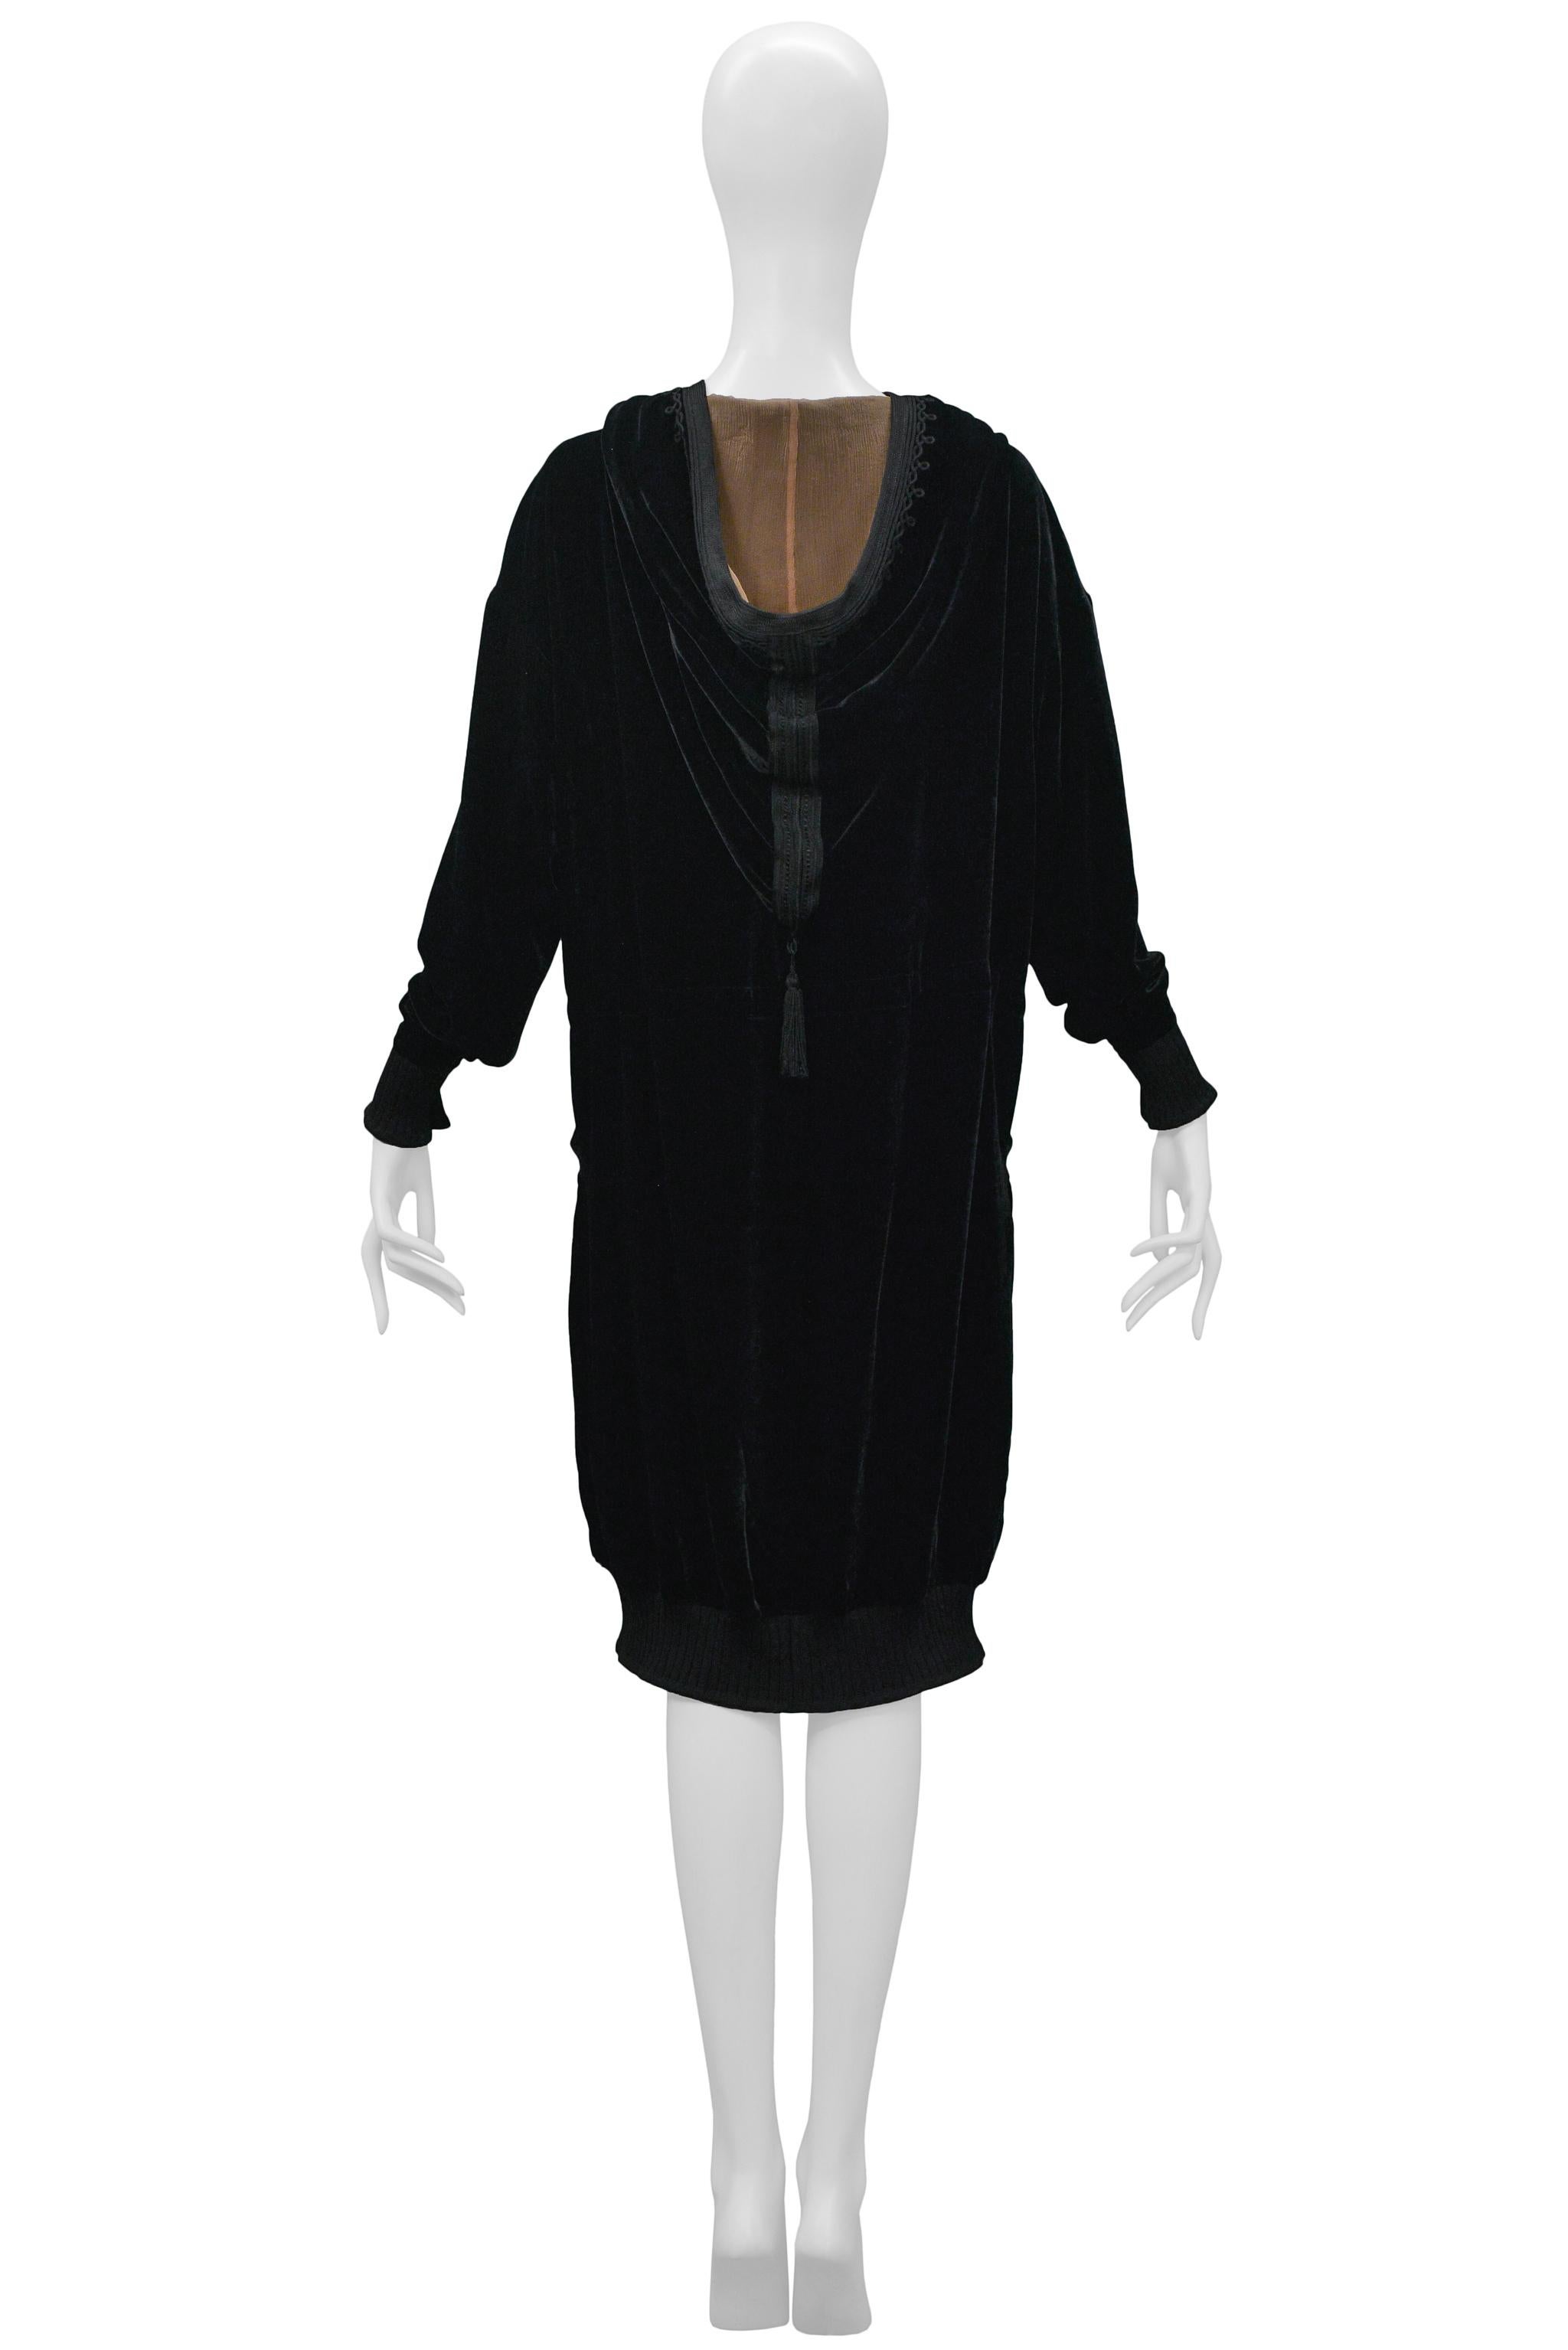 Jean Paul Gaultier Black Velvet Hoodie Tunic Dress 2010 For Sale 5